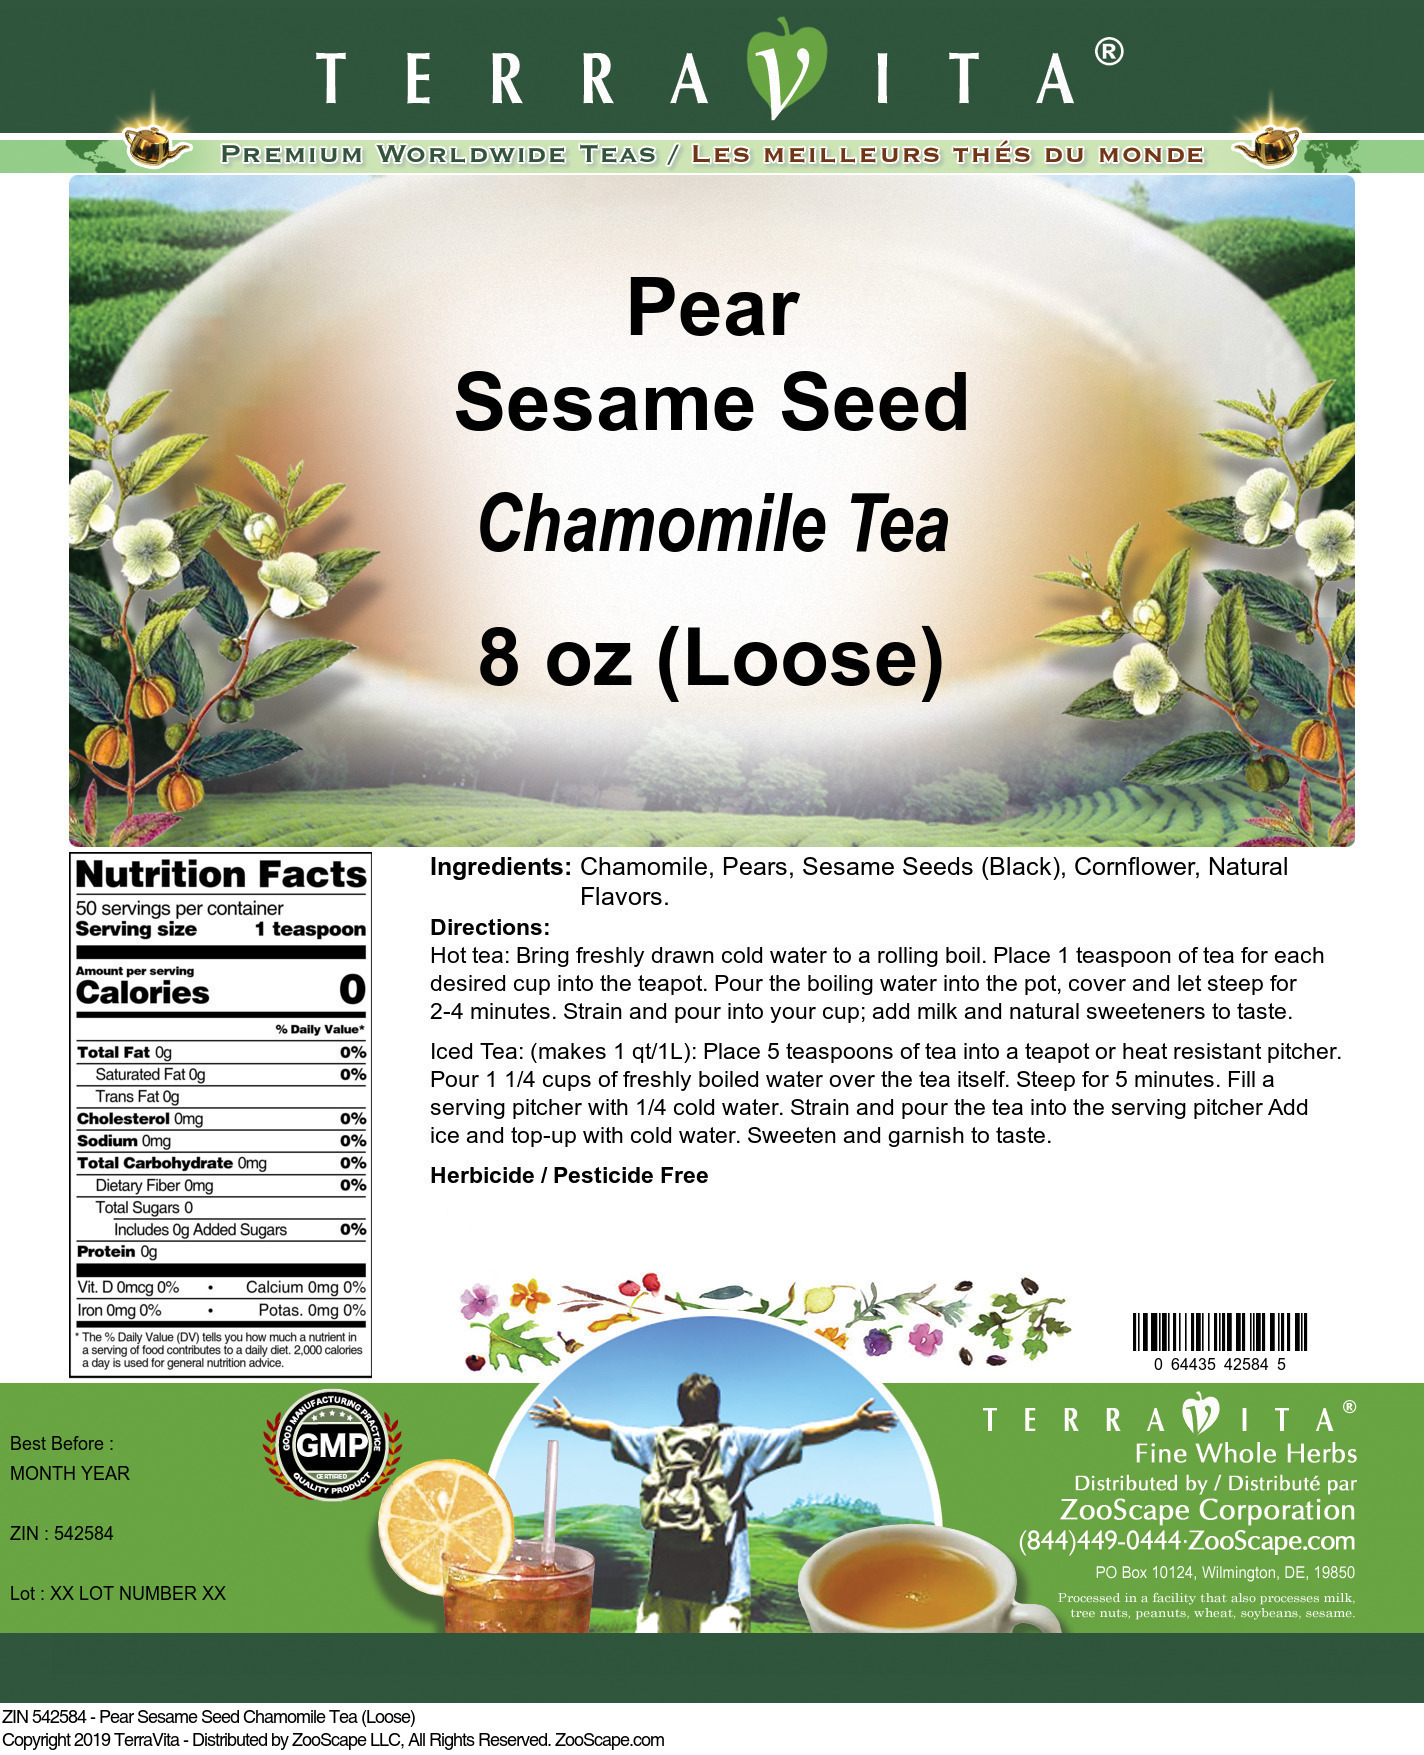 Pear Sesame Seed Chamomile Tea (Loose) - Label